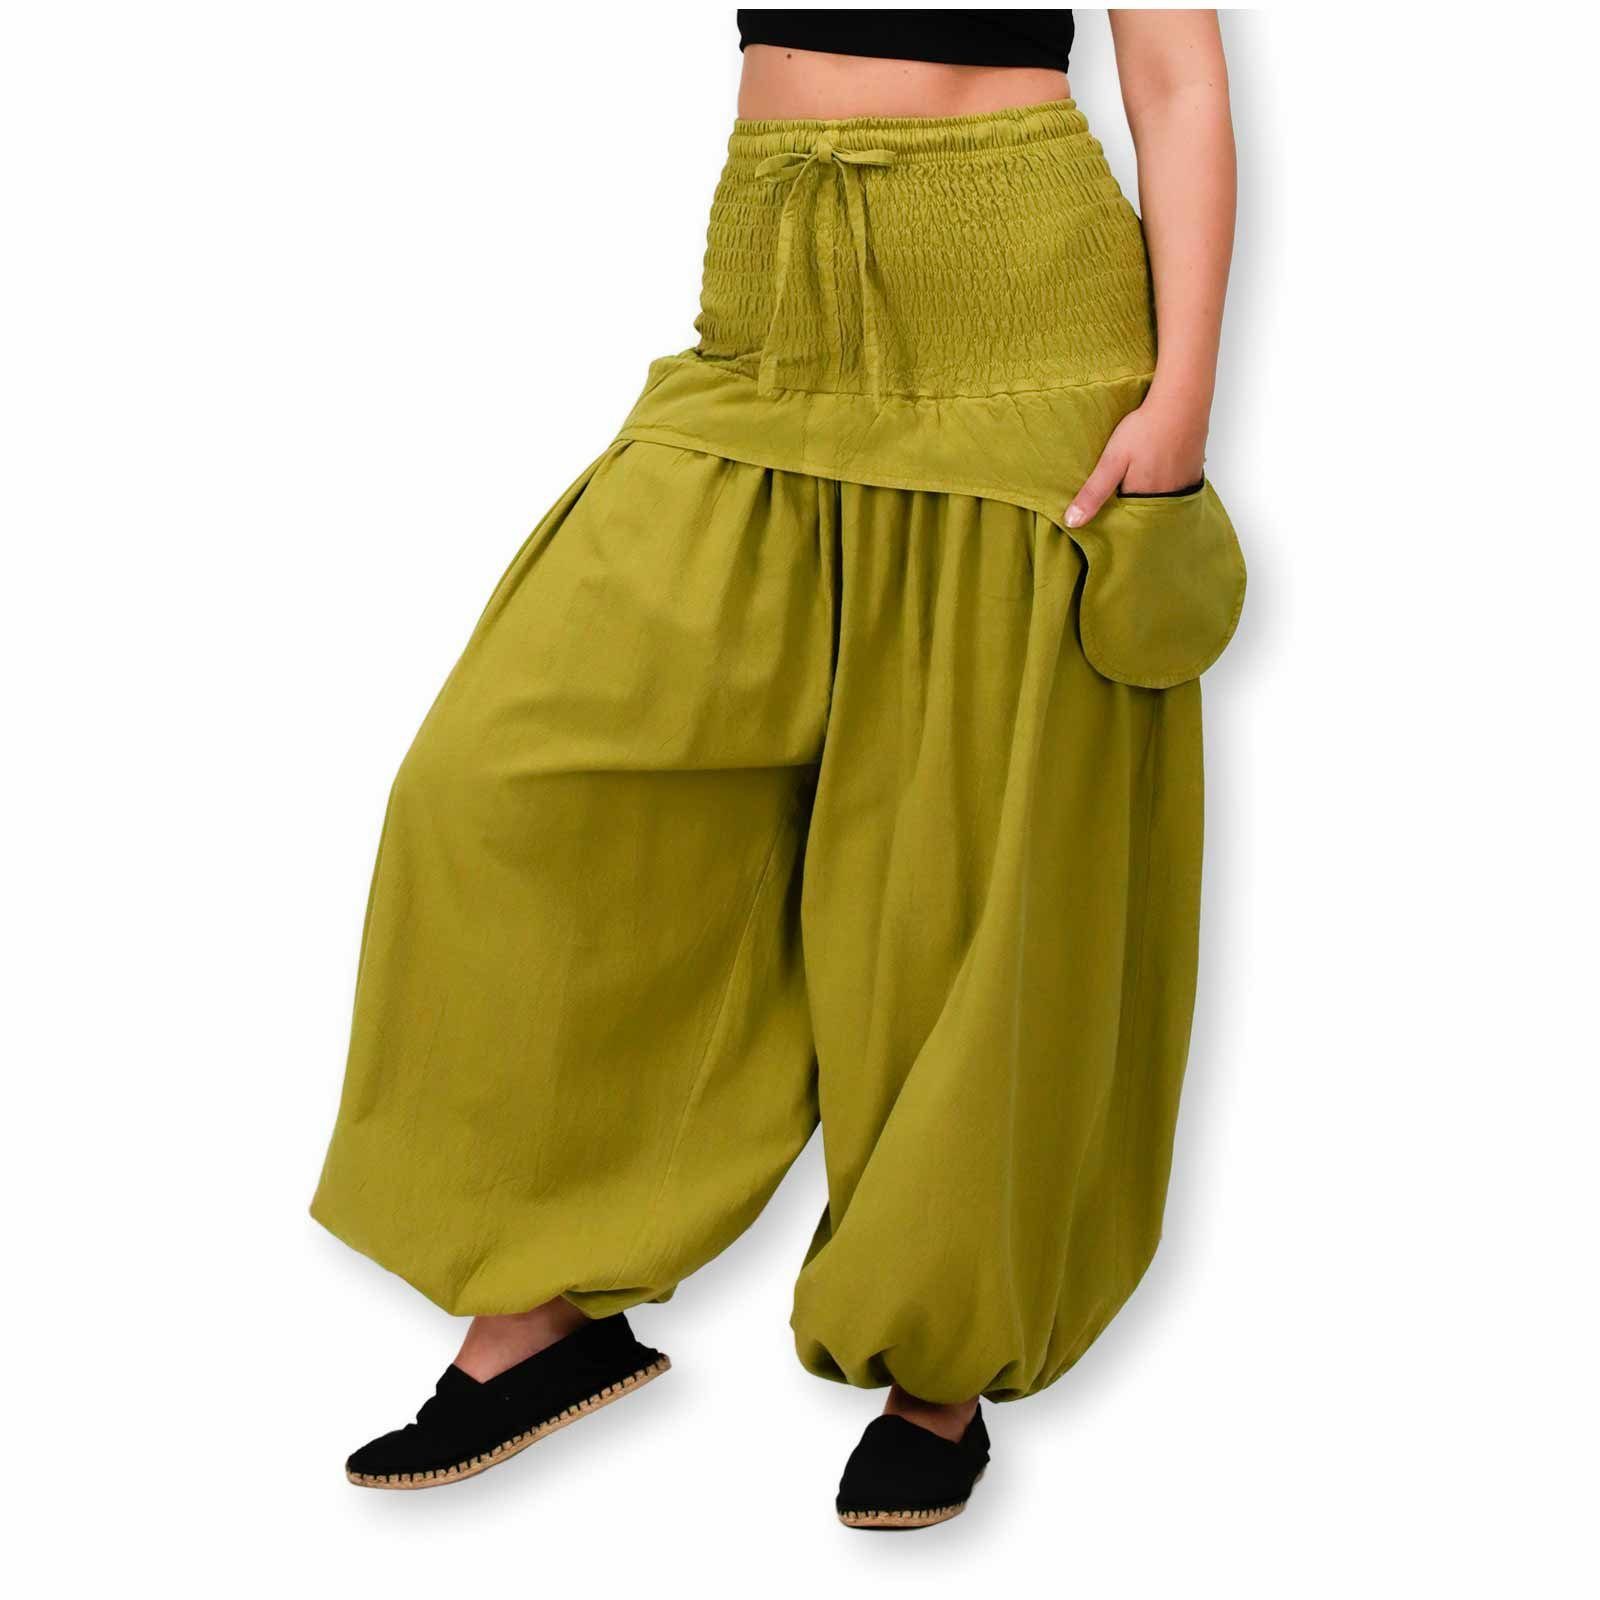 KUNST UND MAGIE Haremshose/Jodhpur-Hose Damen Unifarben Schürzentaschen Vintage Haremshose Lemongreen Hose / Lemongrün praktische